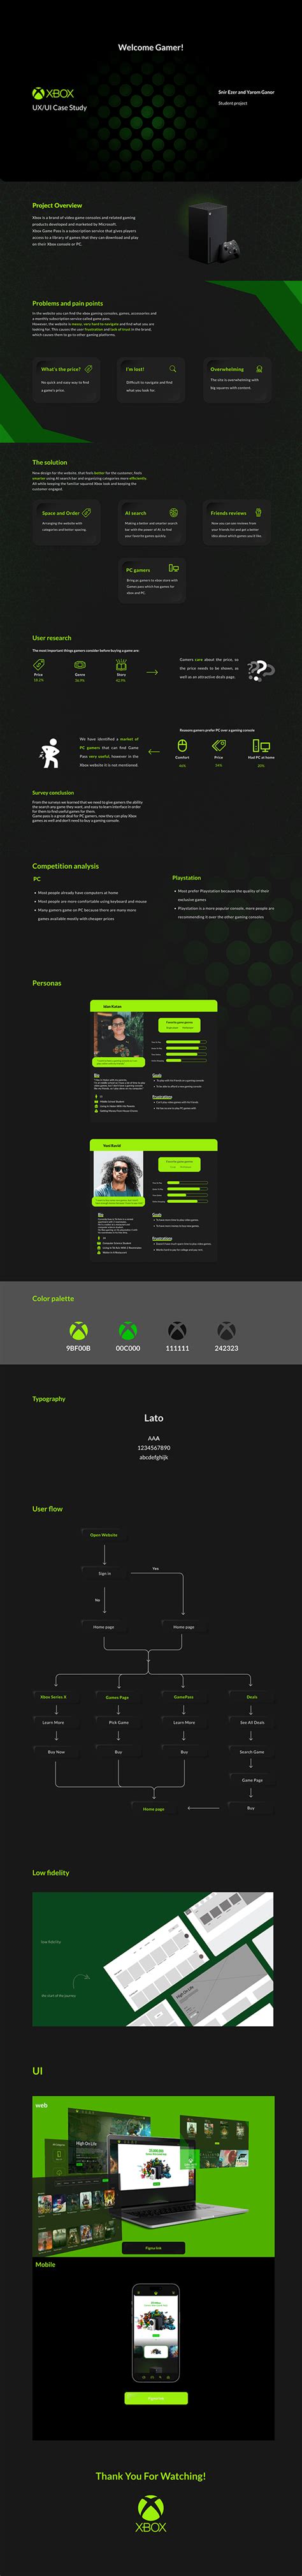 Xbox Redesign On Behance